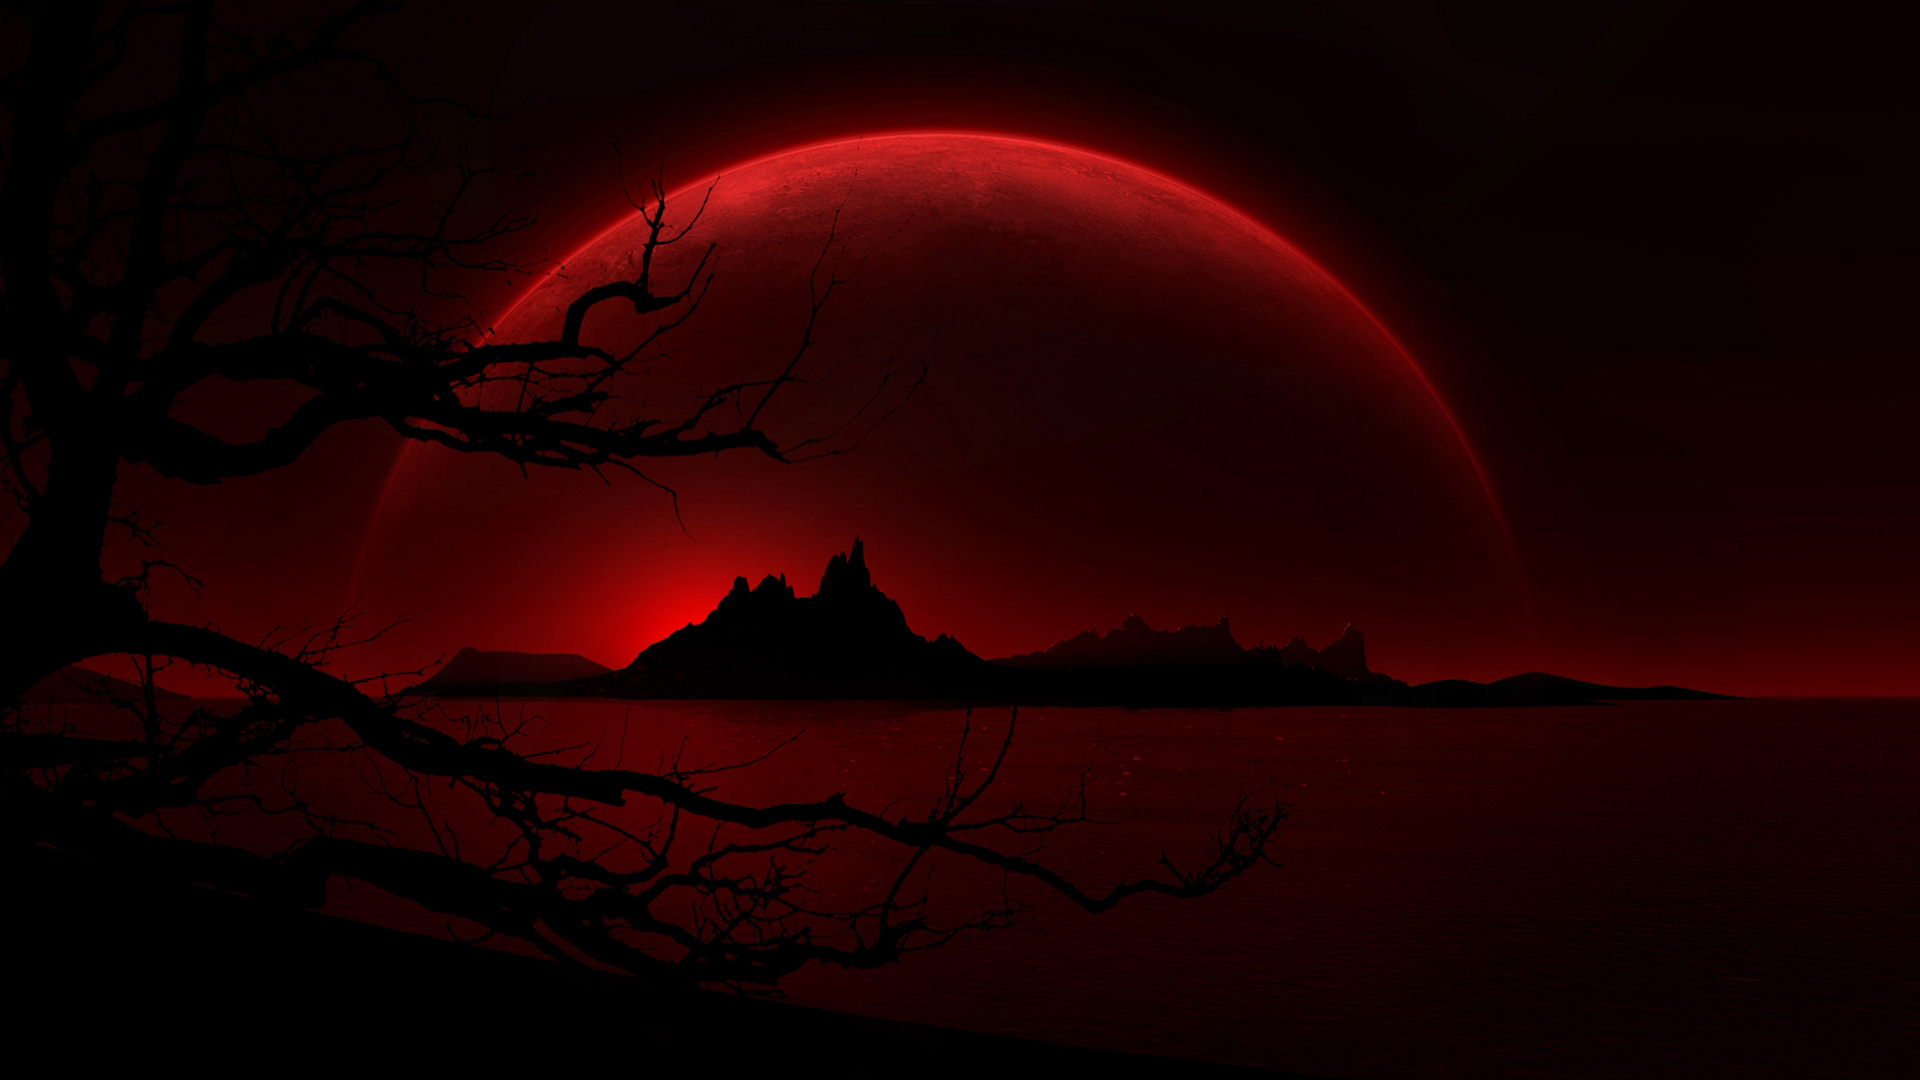 Blood Moon 2015 Photos Download Free Desktop Wallpaper Images